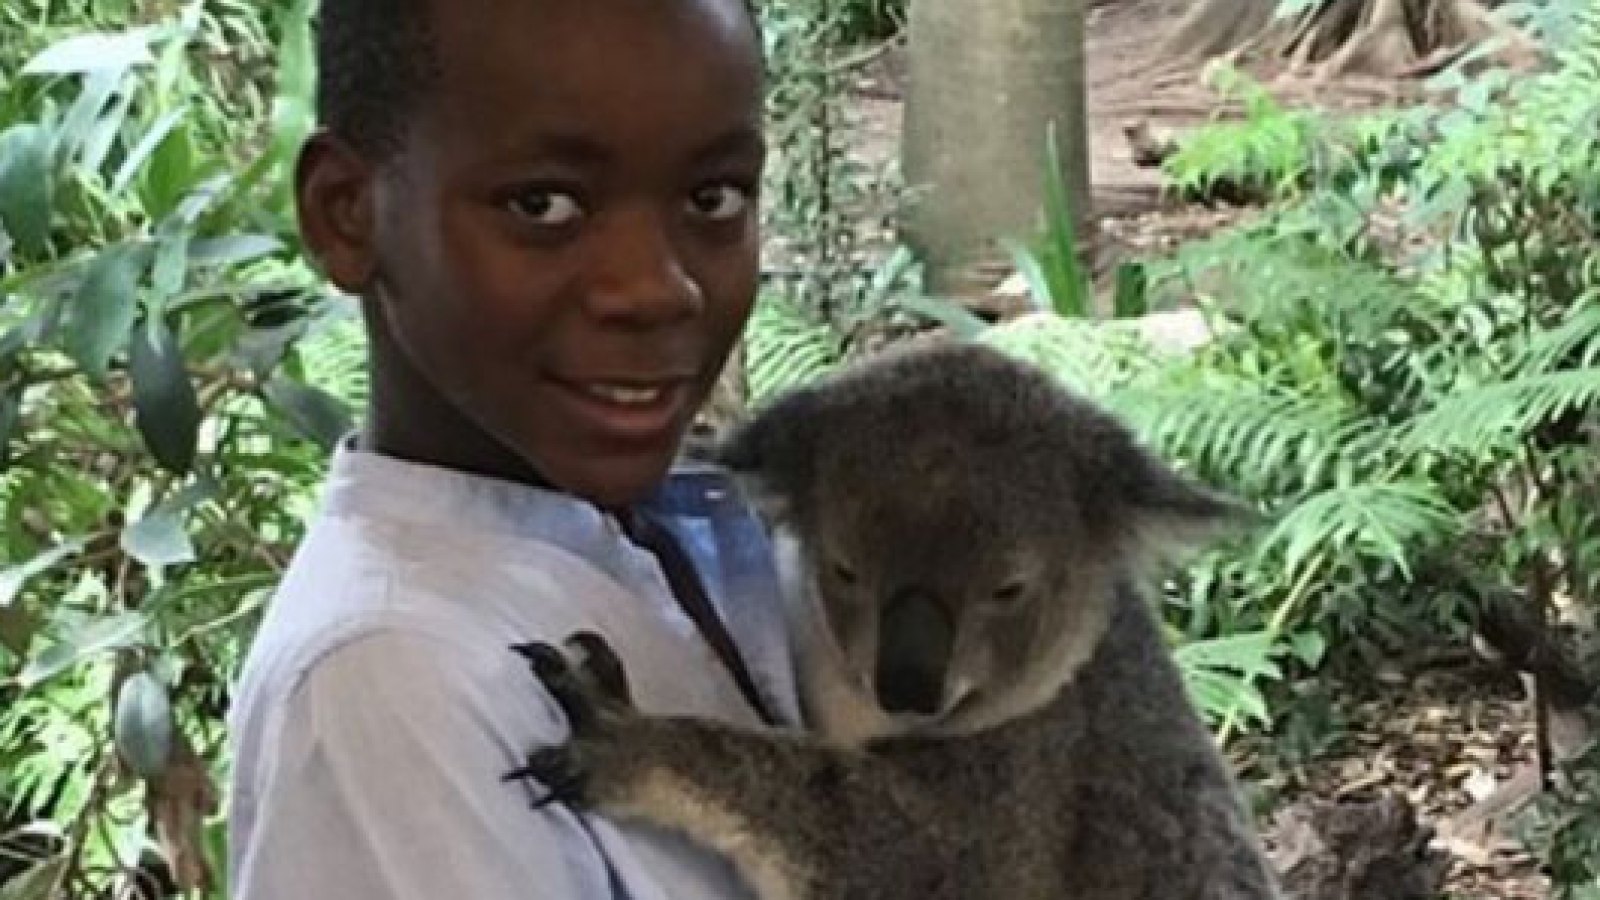 Madonna's son David cuddles a koala in Australia